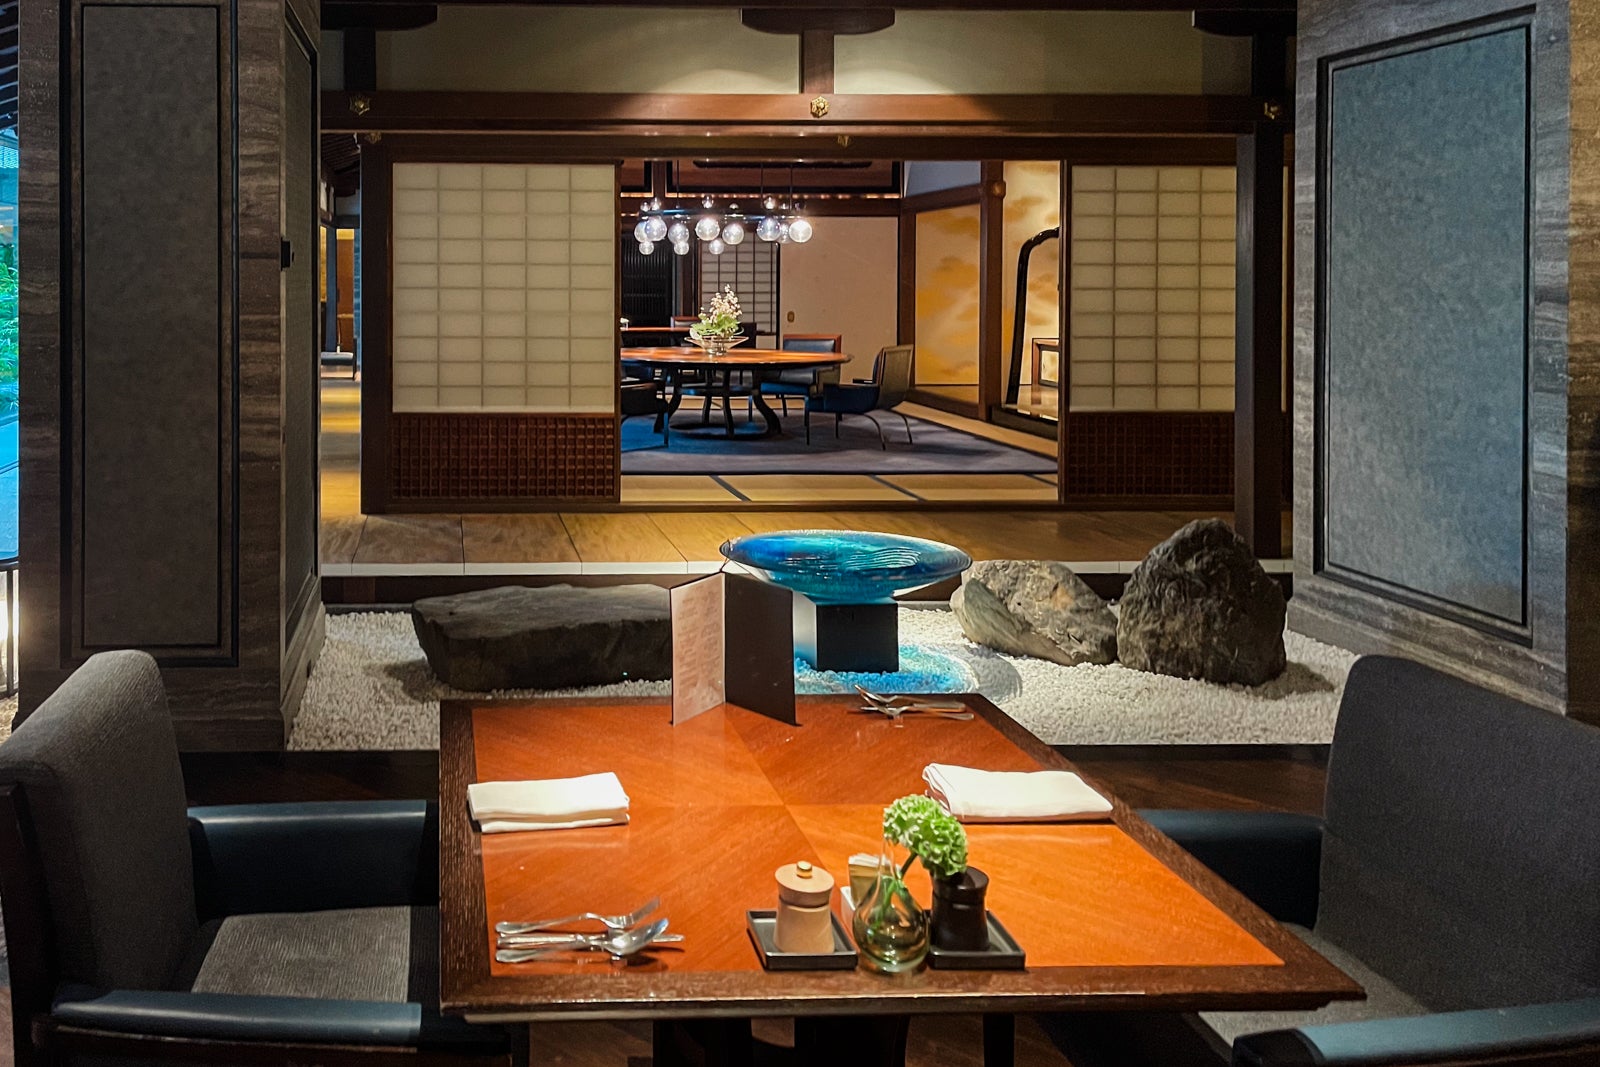 La Locanda dining room at The Ritz-Carlton, Kyoto